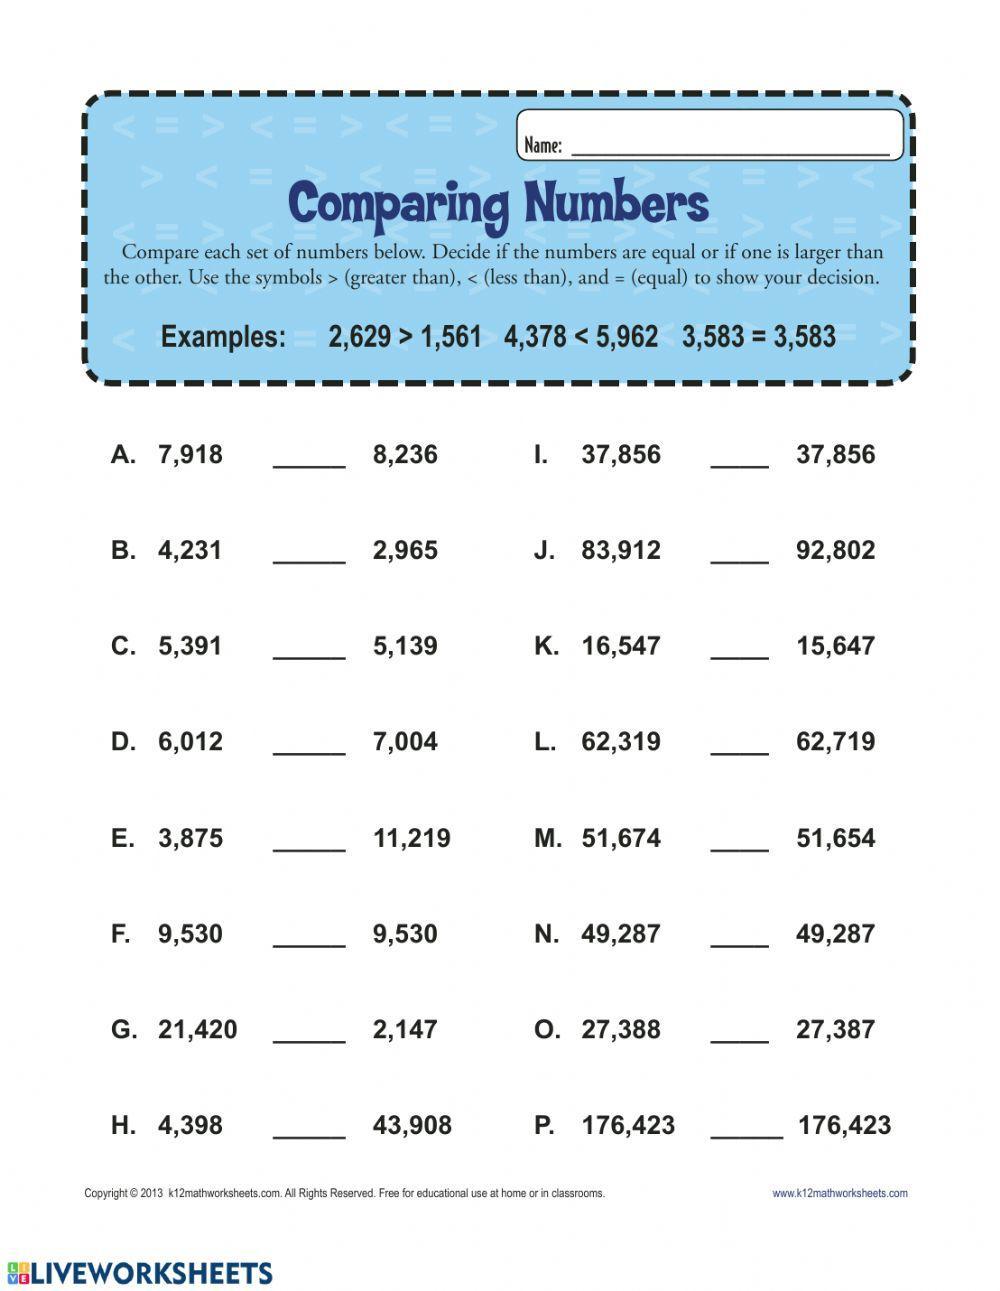 Comparing Numbers using symbols